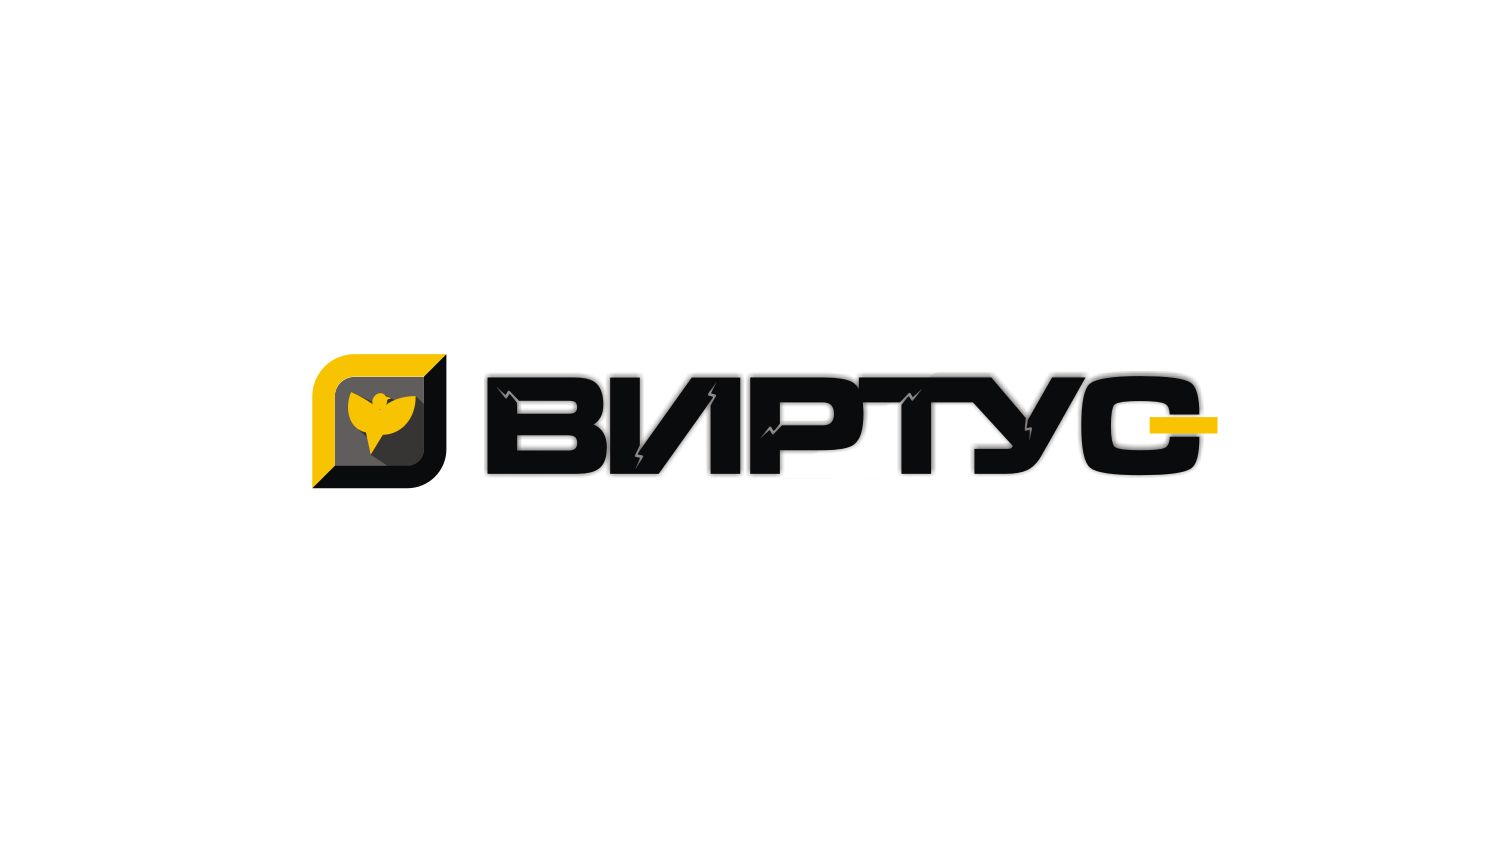 Логотип и фирменный стиль компании Виртус - дизайнер markosov